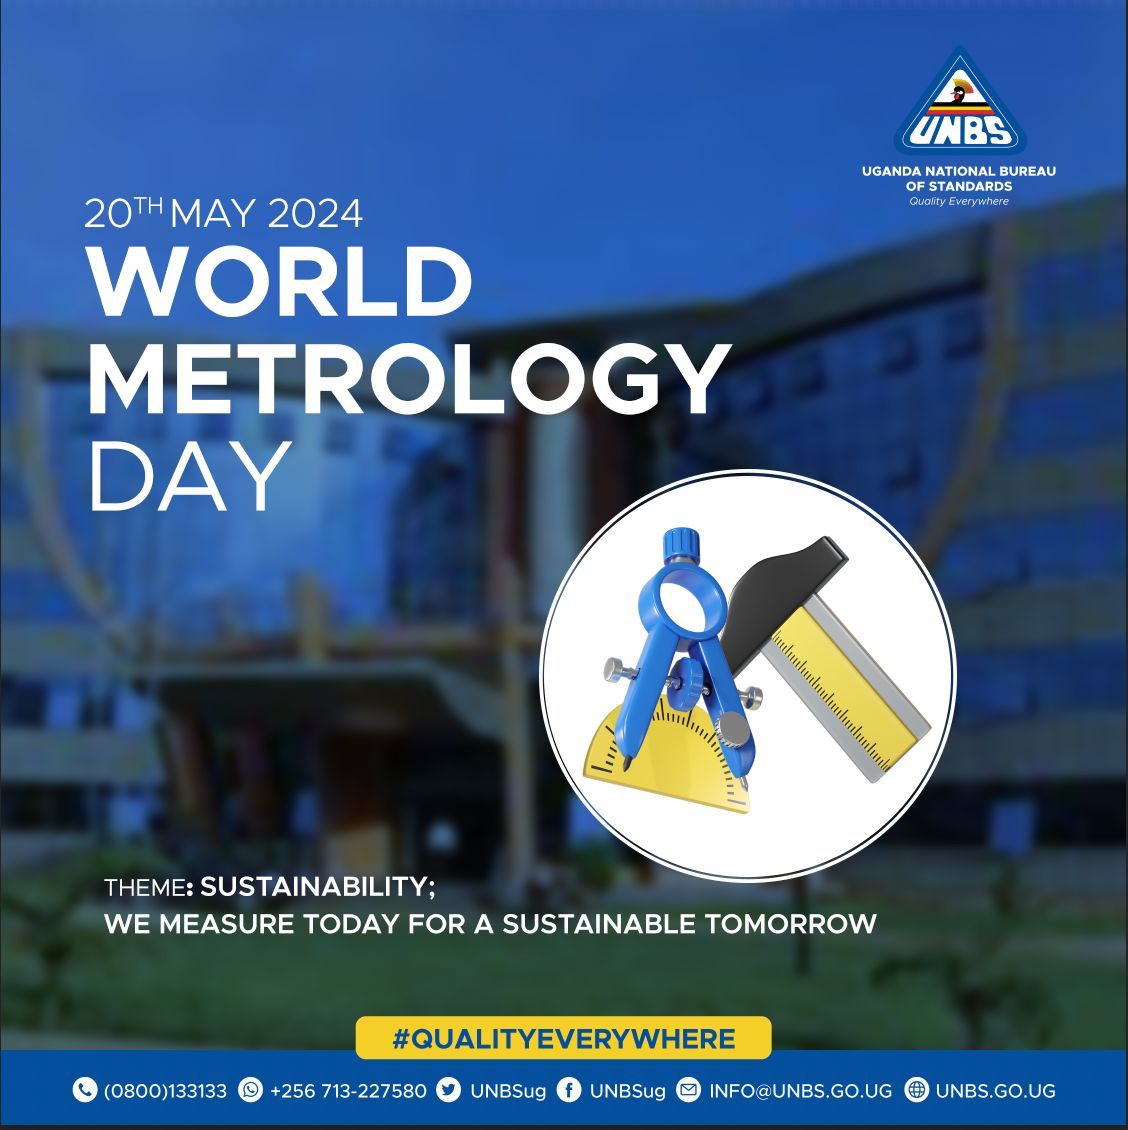 #HappyWorldMetrologyDay2024# We measure today for a sustainable tomorrow. #QualityEverywhere #Sustainability #Metrology